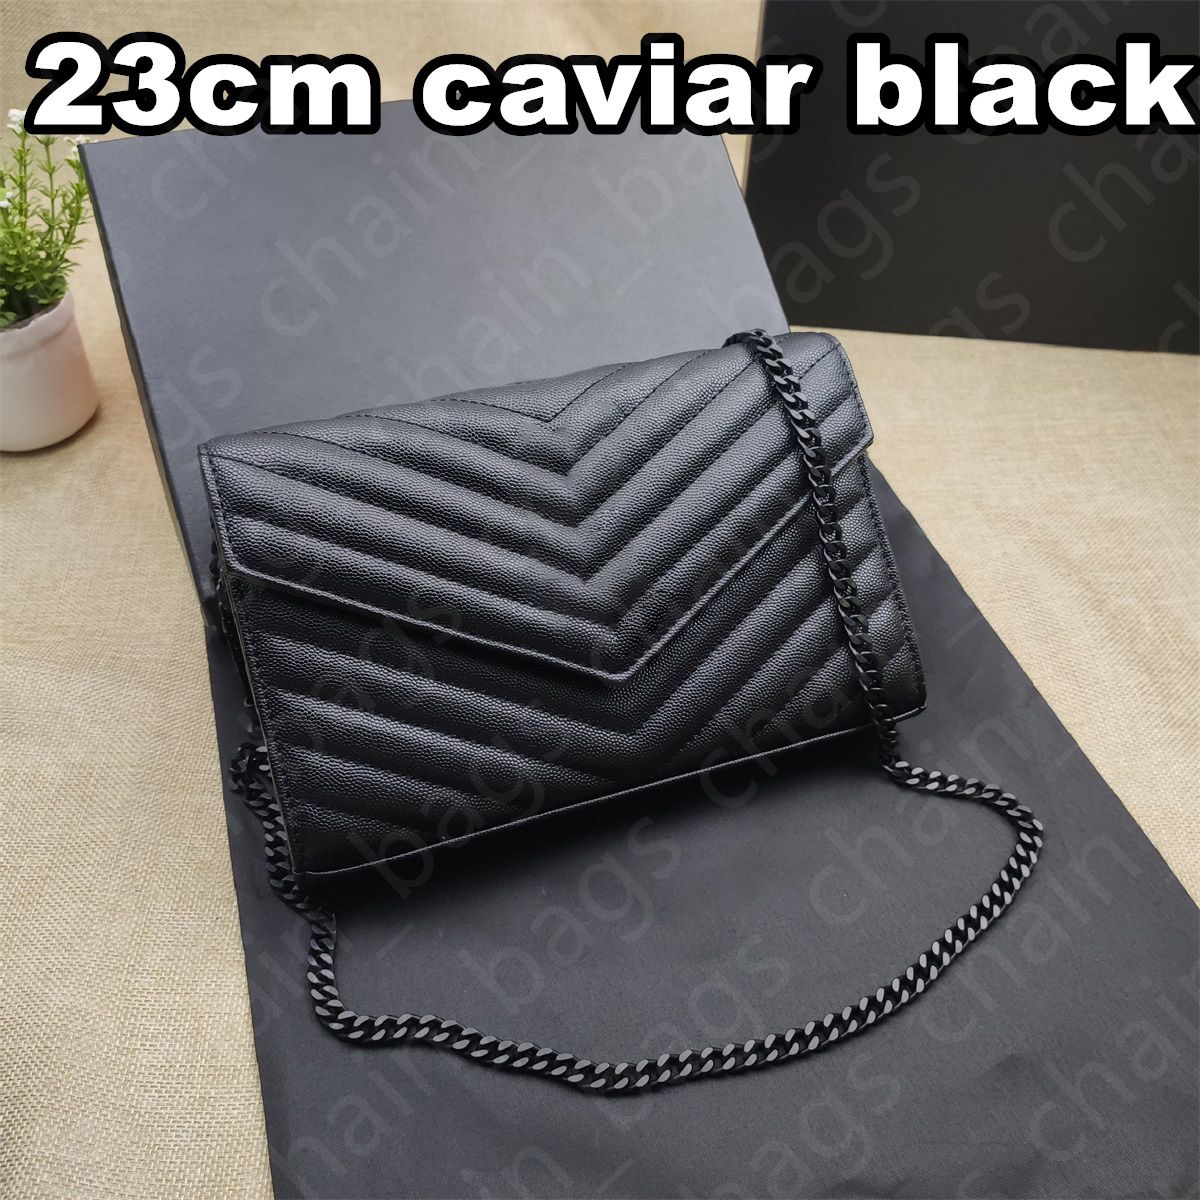 Caviar black_black